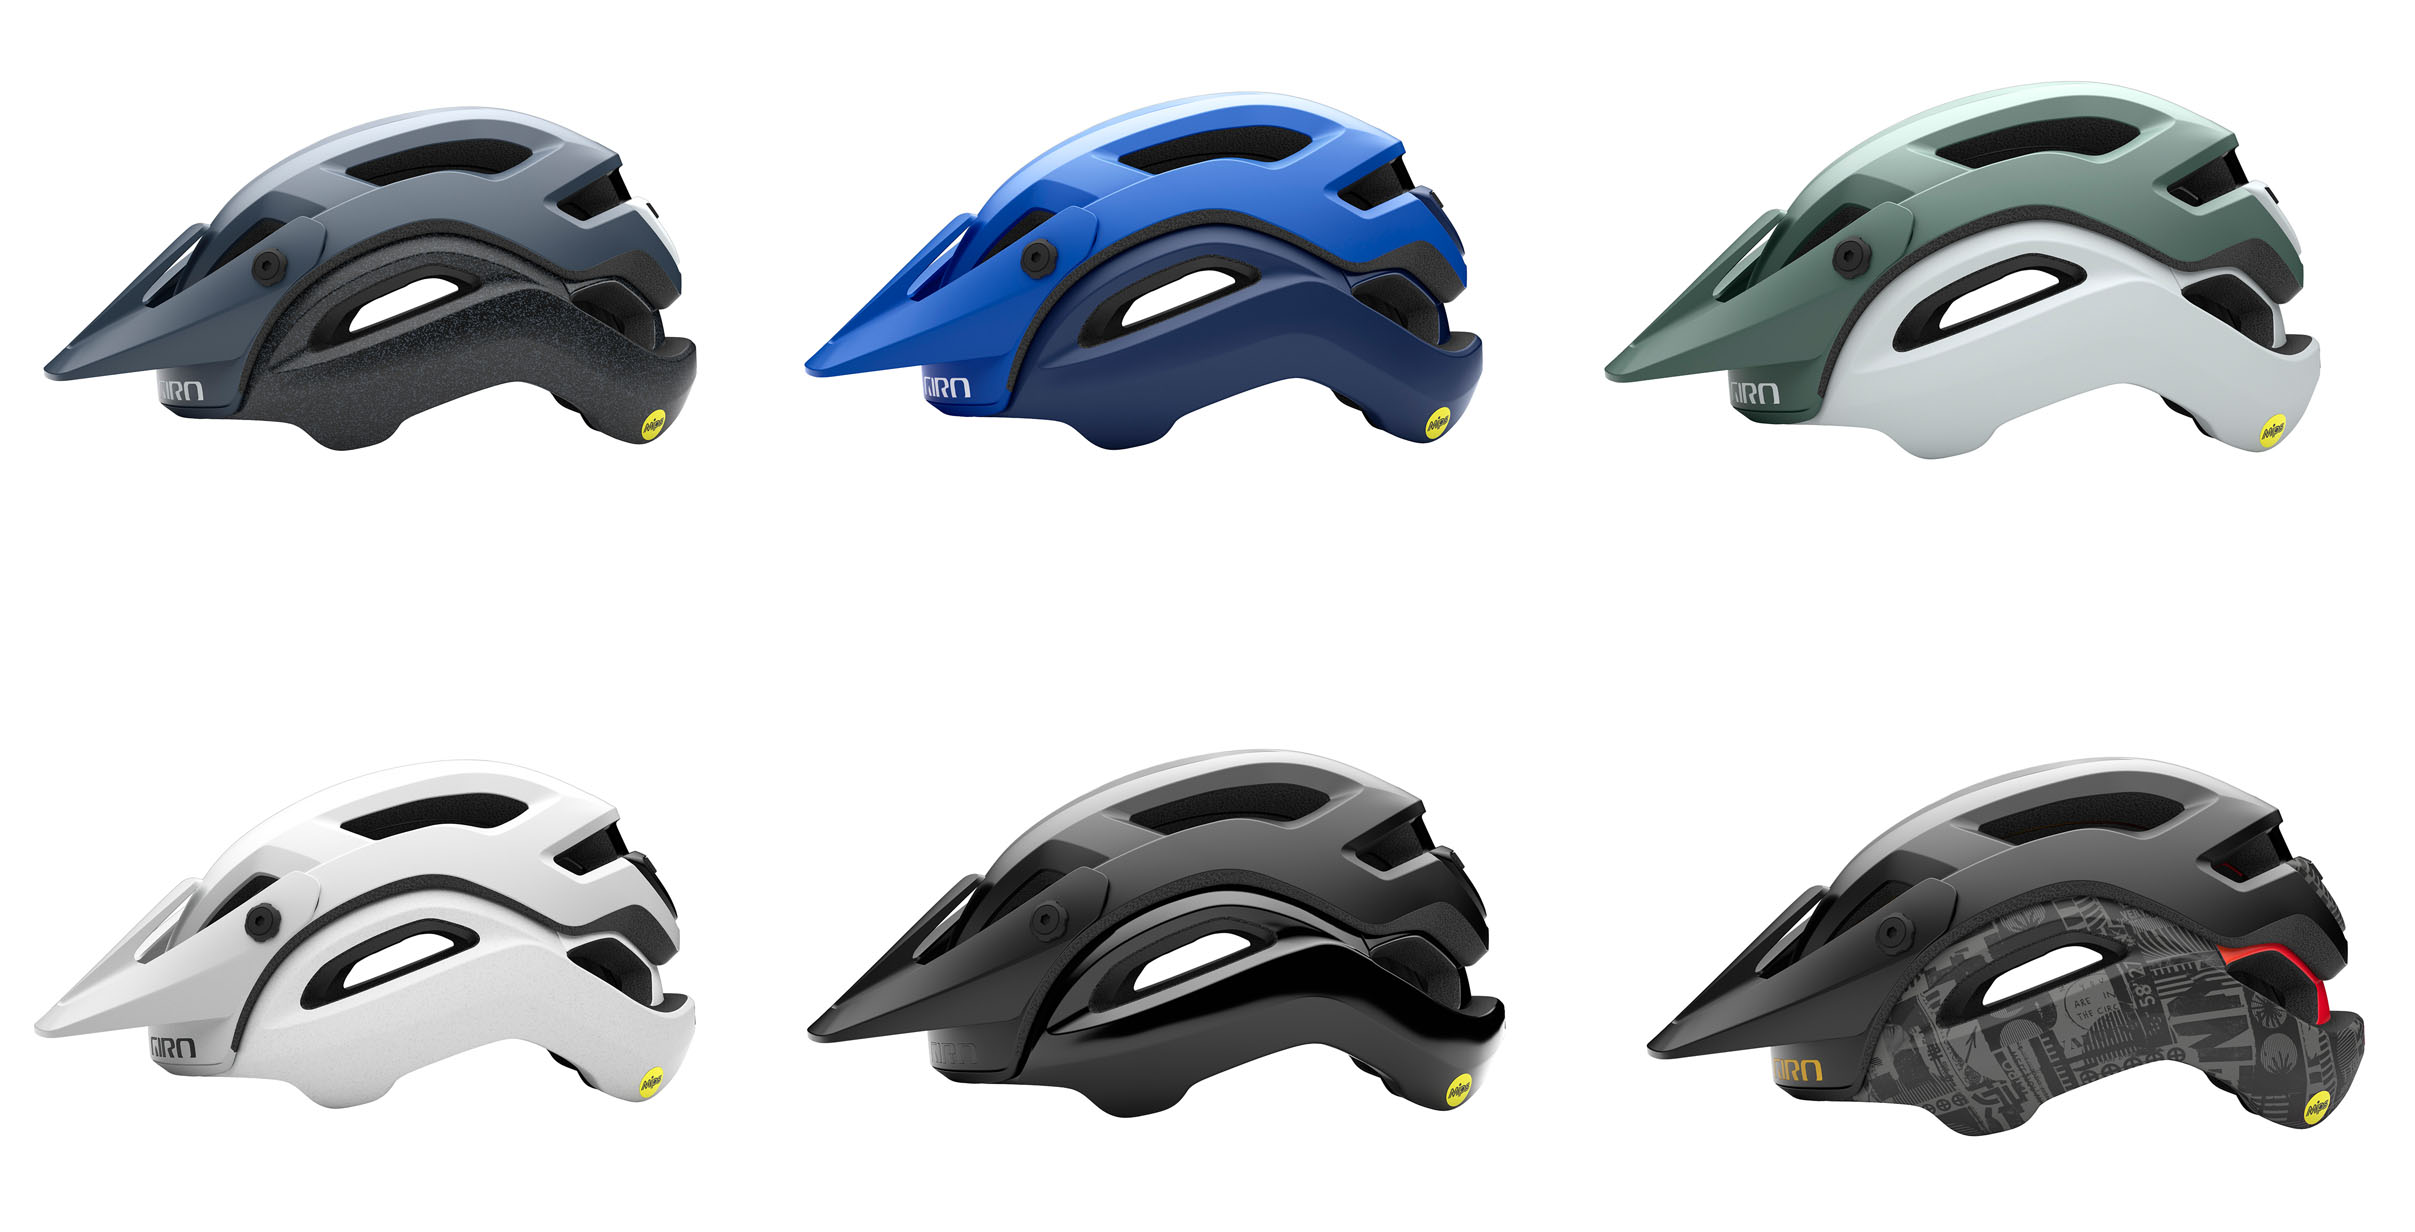 Hands On: Giro Manifest Spherical appears to be Giro's next great mountain bike helmet